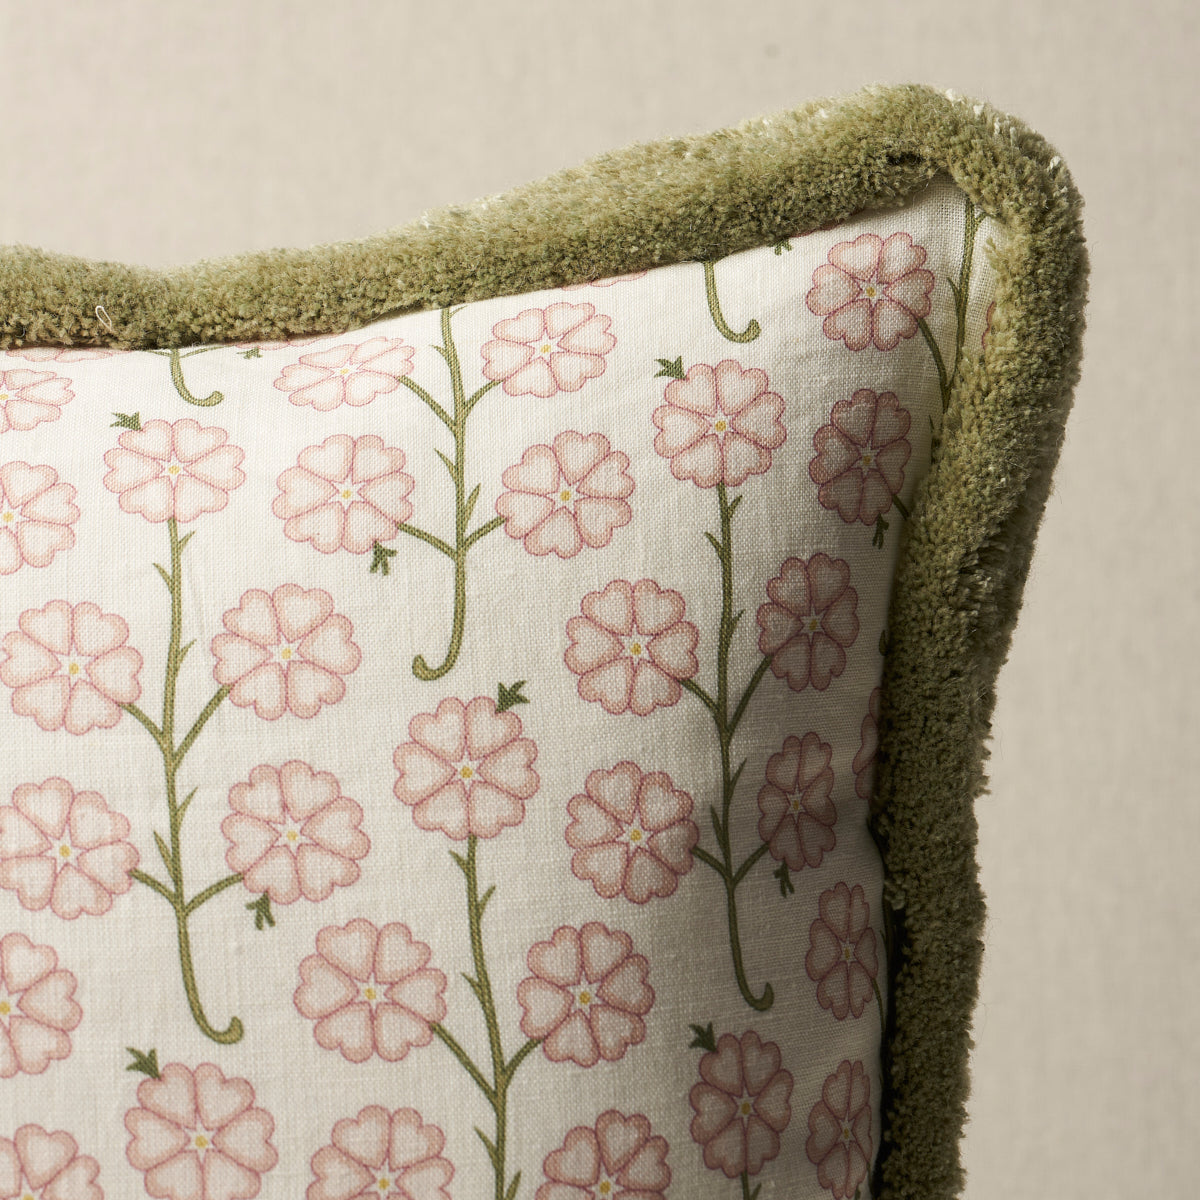 Gardenia Pillow | Rose